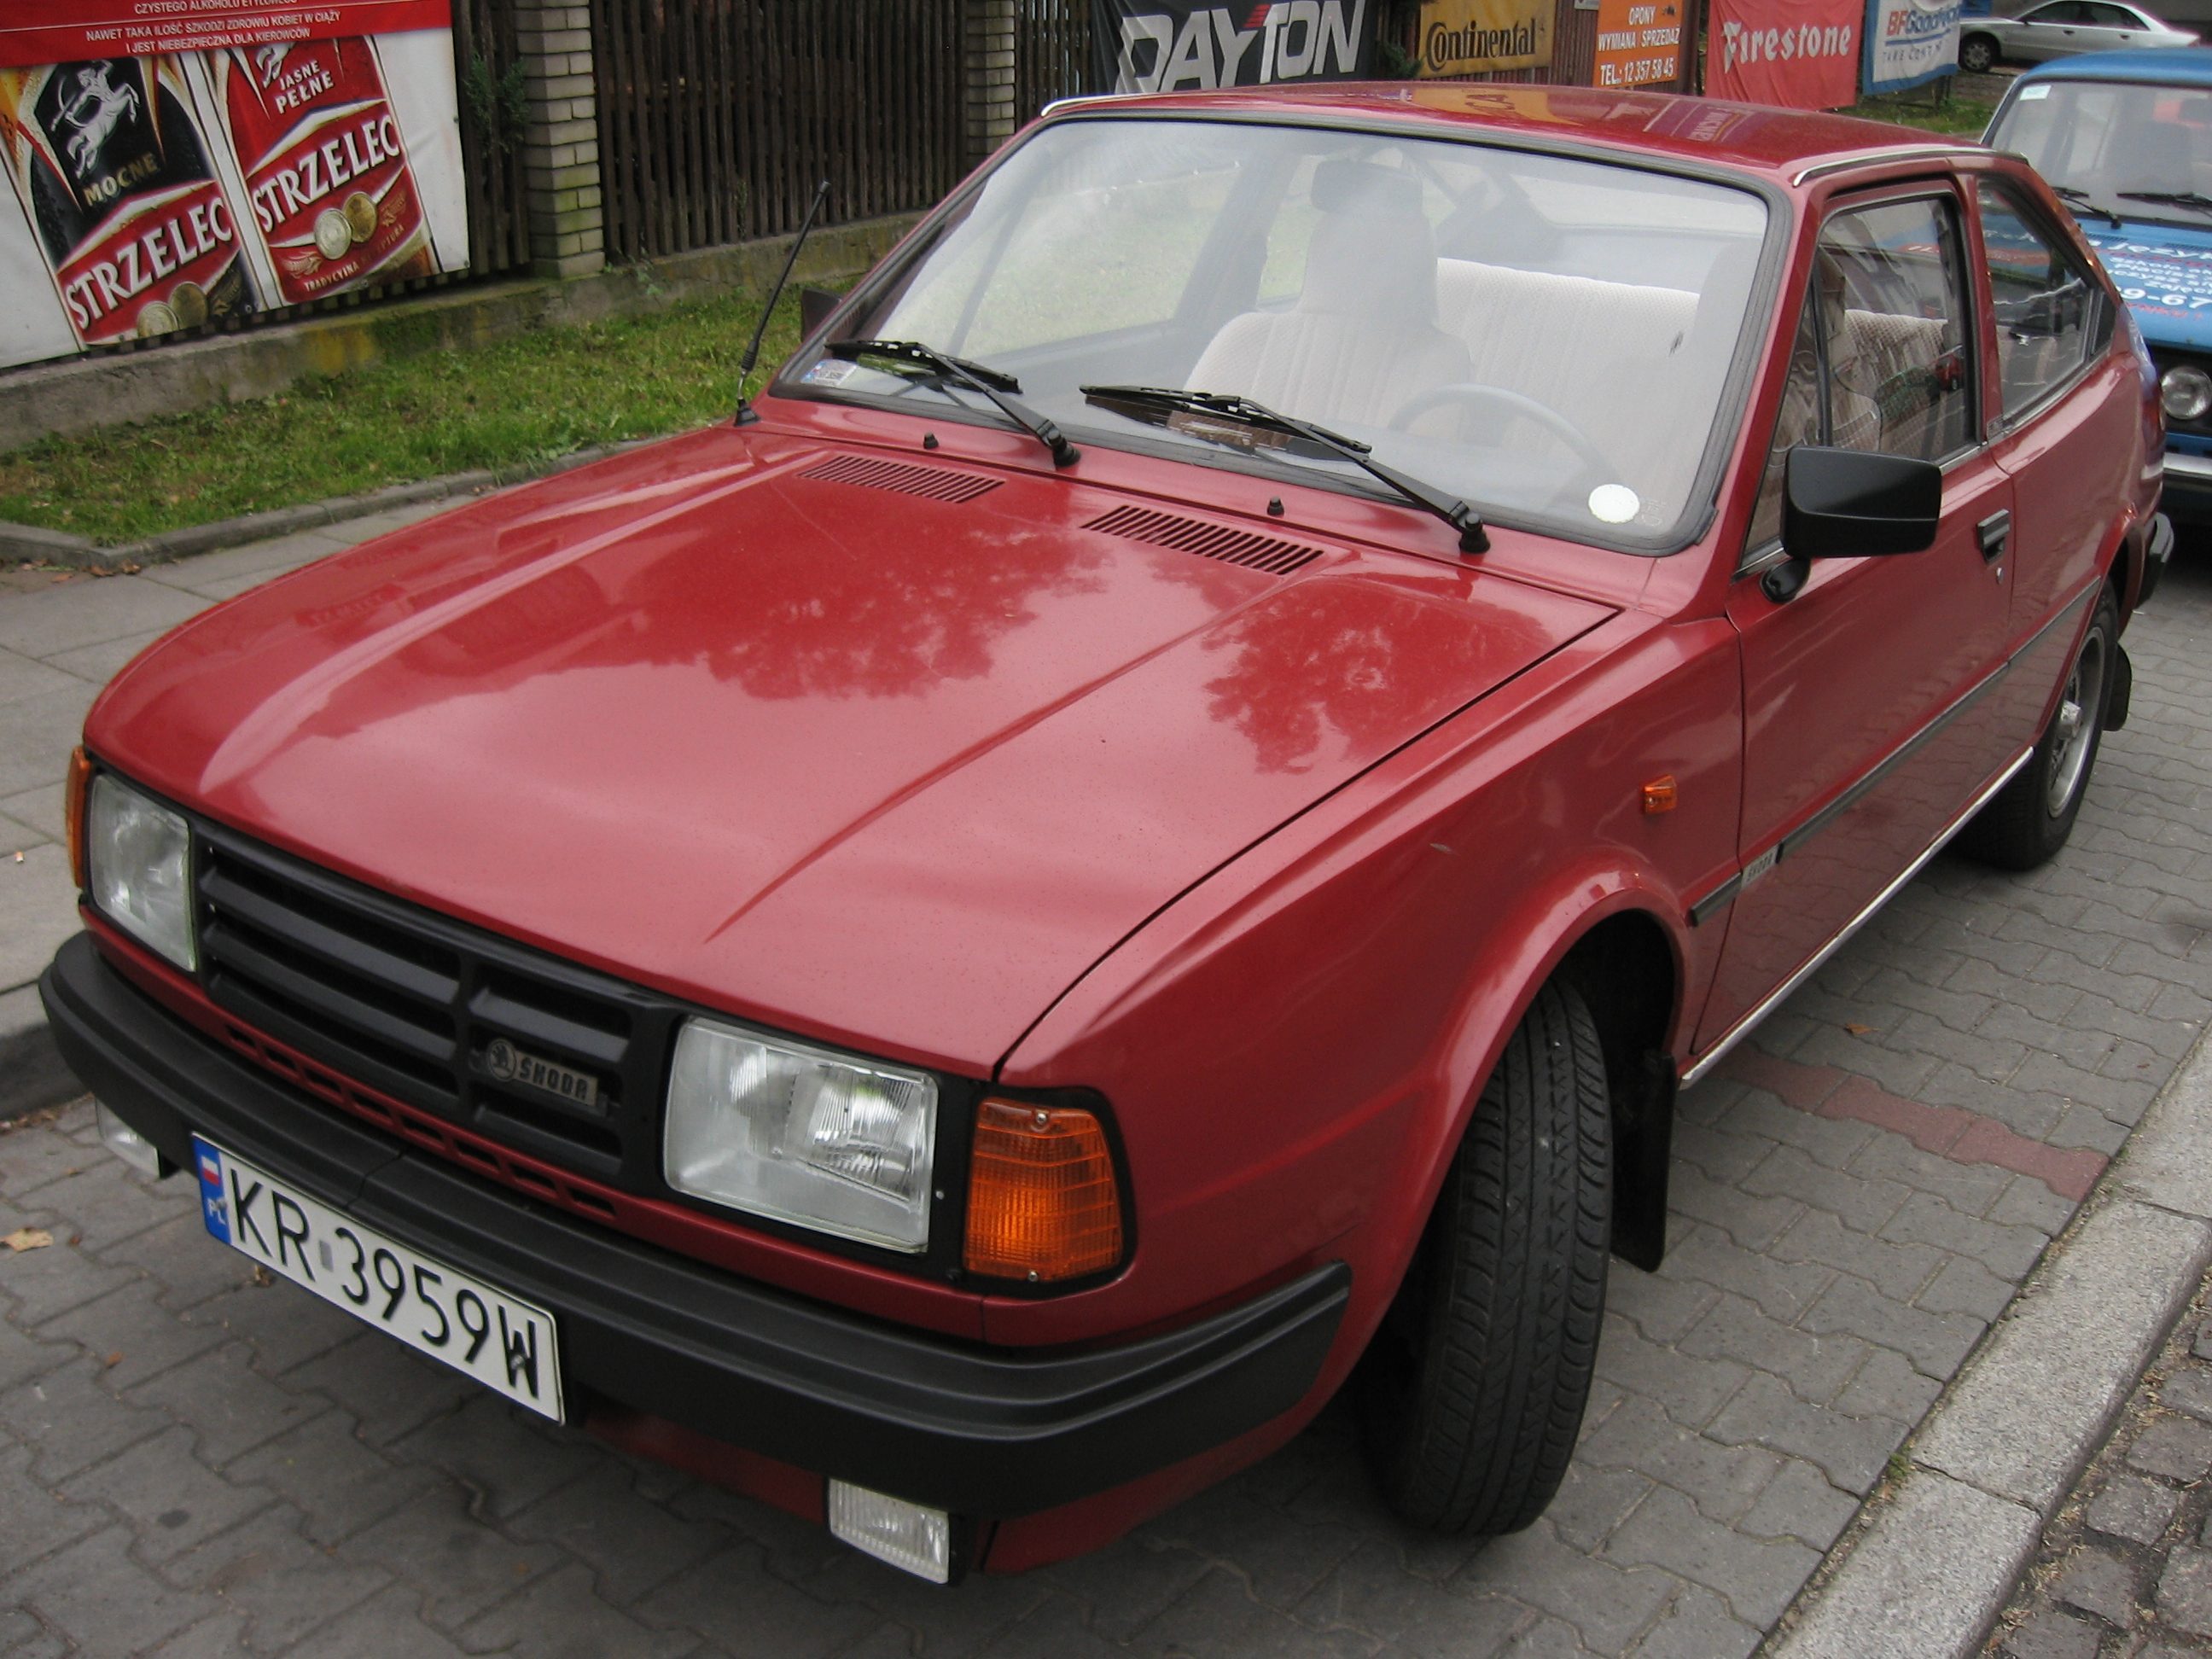 Škoda Rapid (1984) - Wikipedia